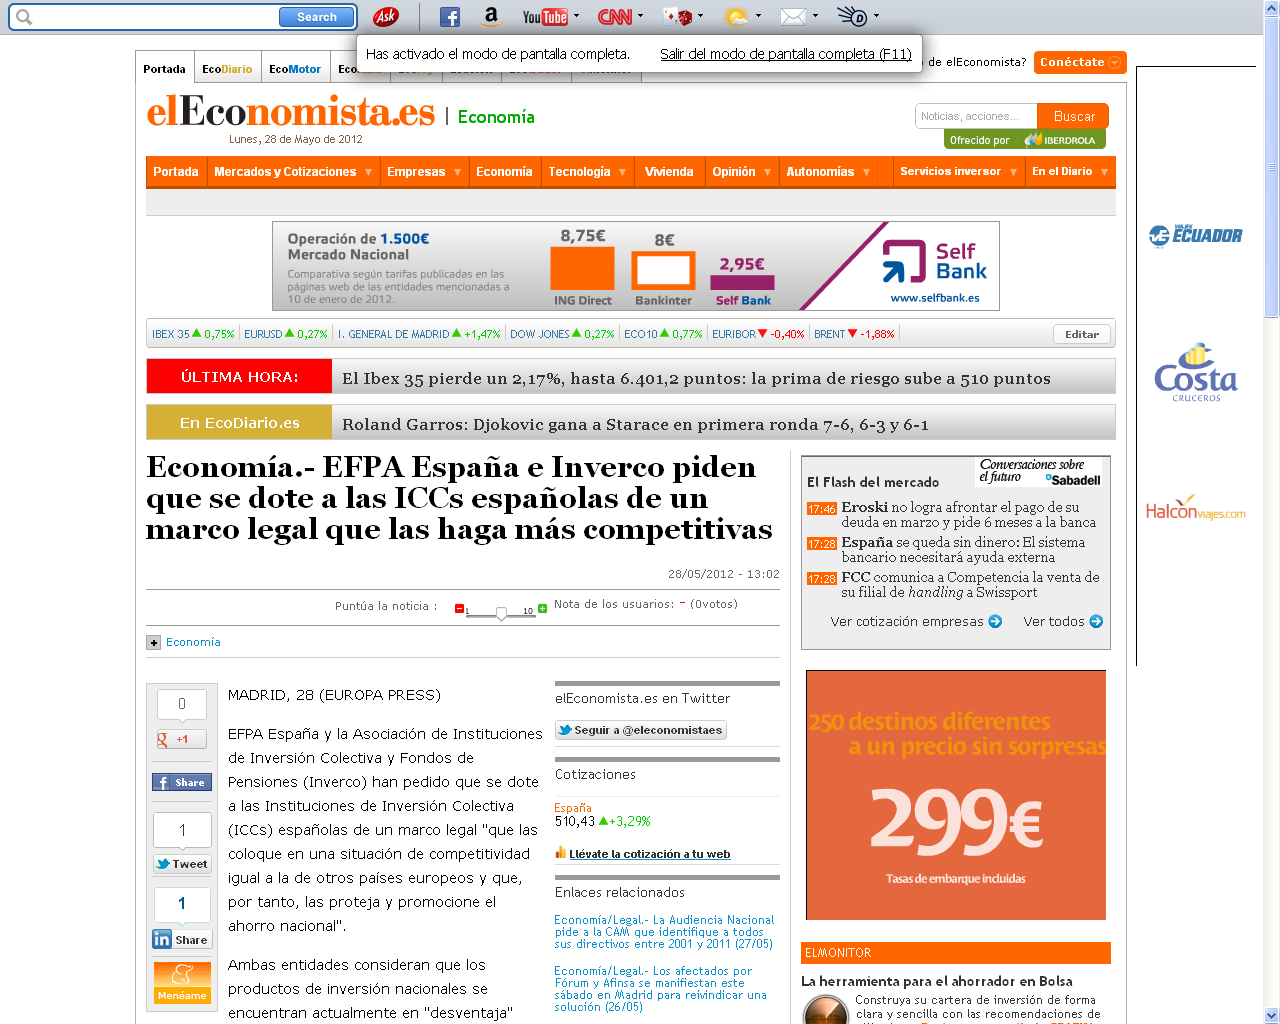 Medio: Eleconomista.es Fecha: 28.05.2012 Cliente: EFPA Link: http://www.eleconomista.